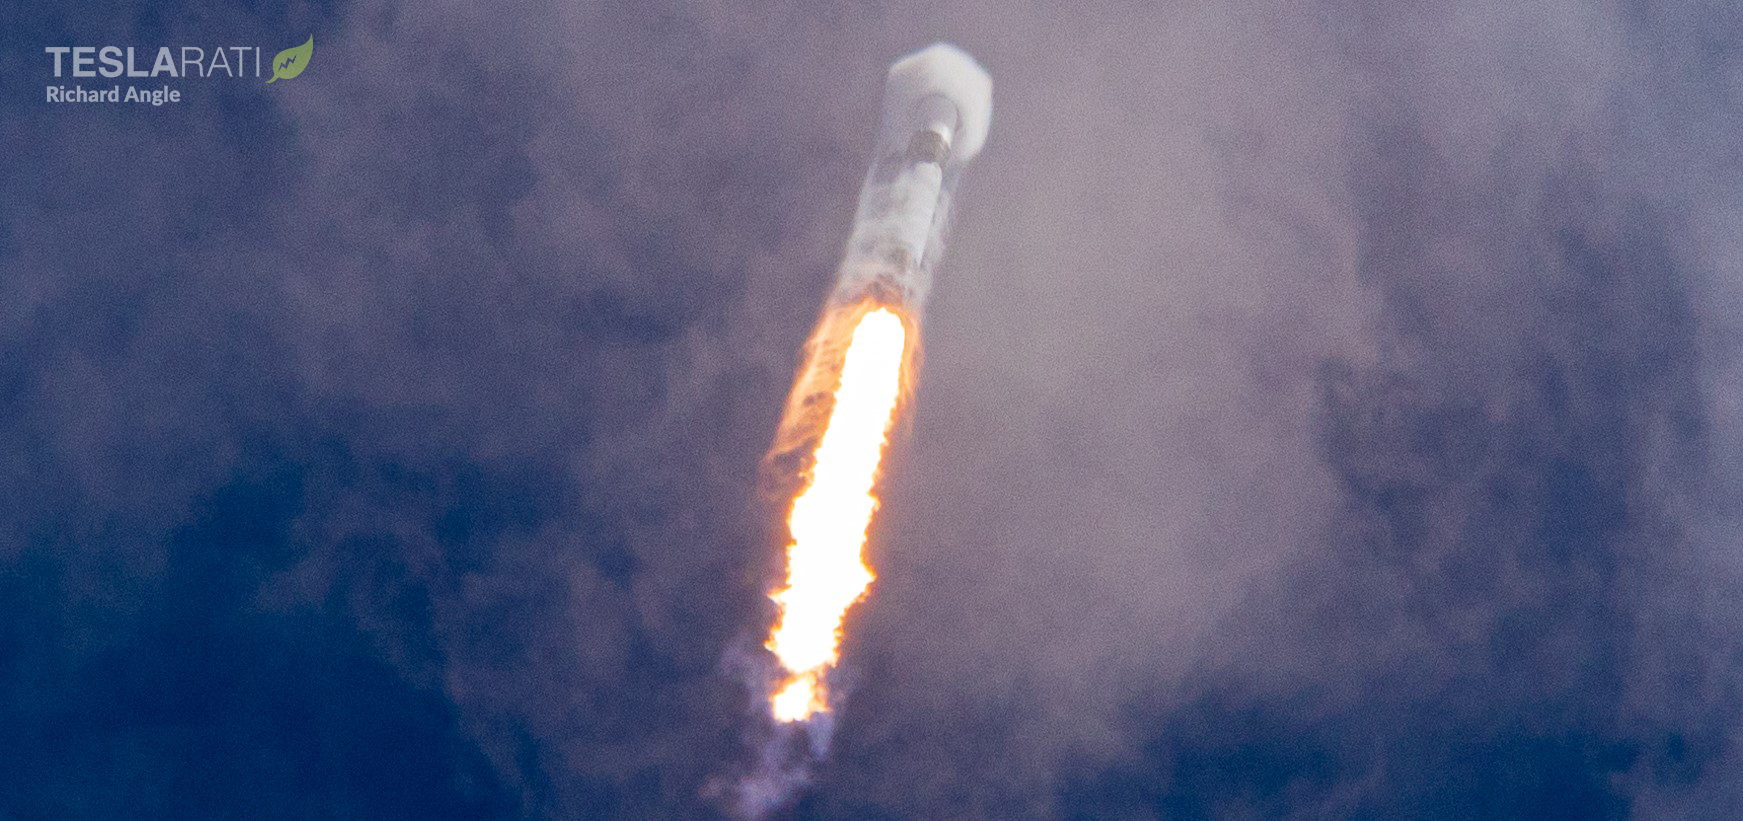 Starlink-10 SkySat Falcon 9 B1049 081820 (Richard Angle) launch 1